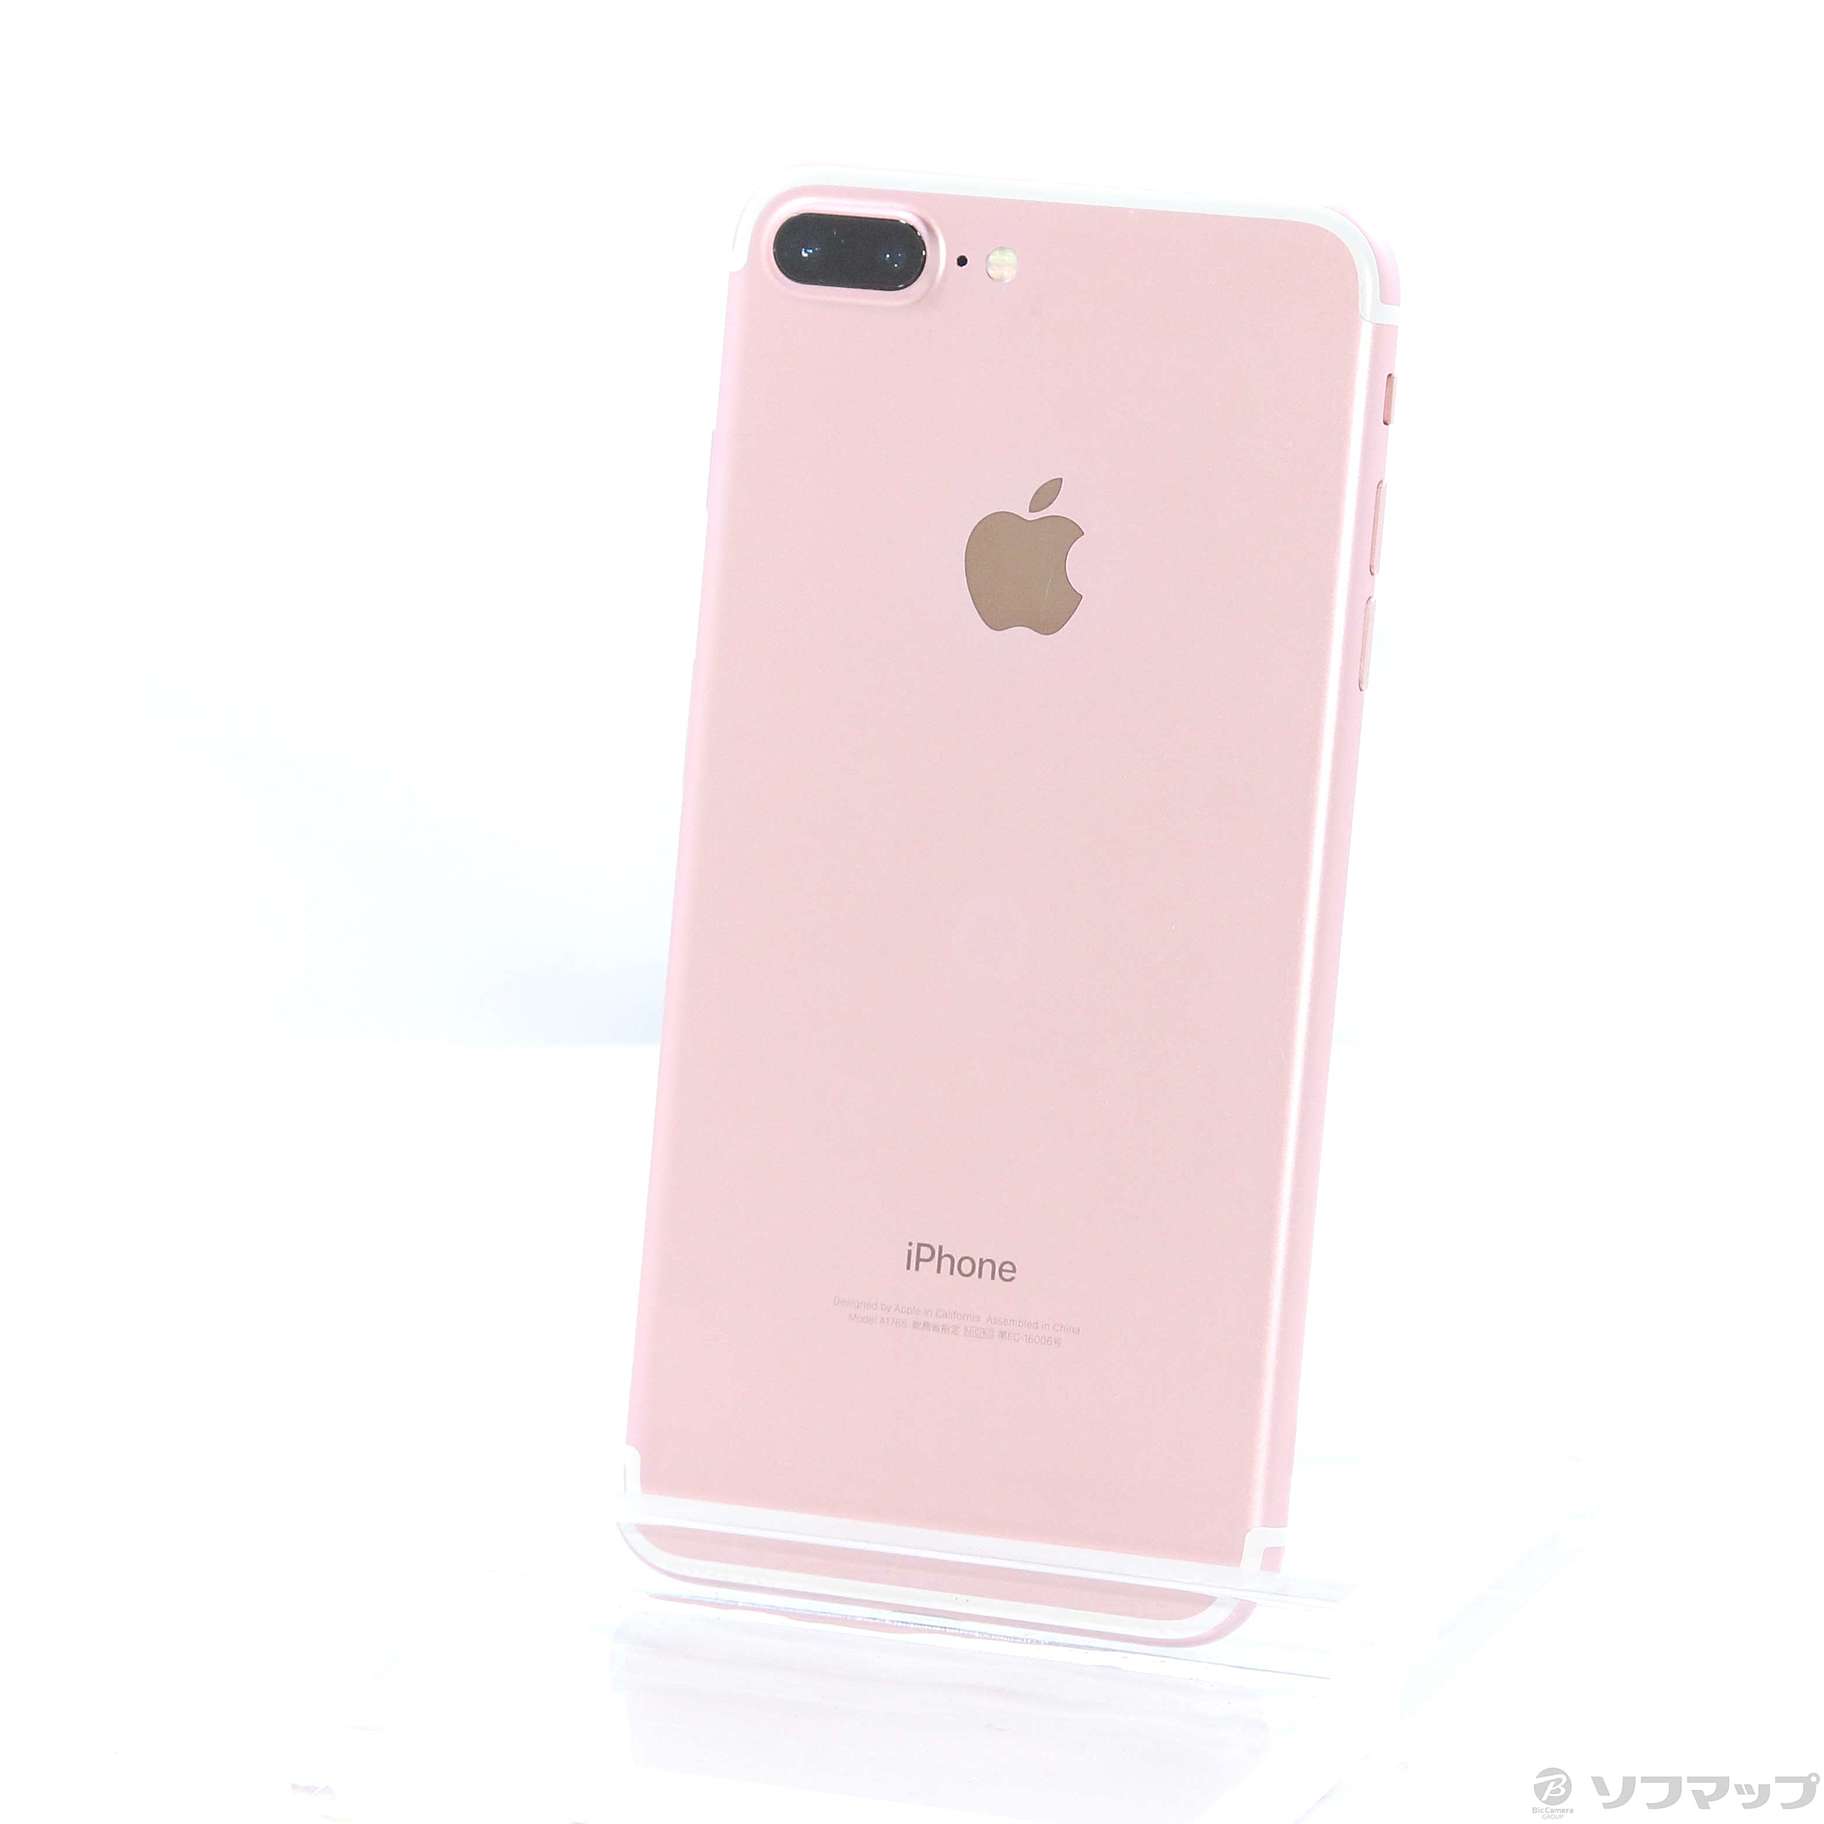 iPhone 7 Plus Rose Gold 128 GB SIMフリー - library.iainponorogo.ac.id